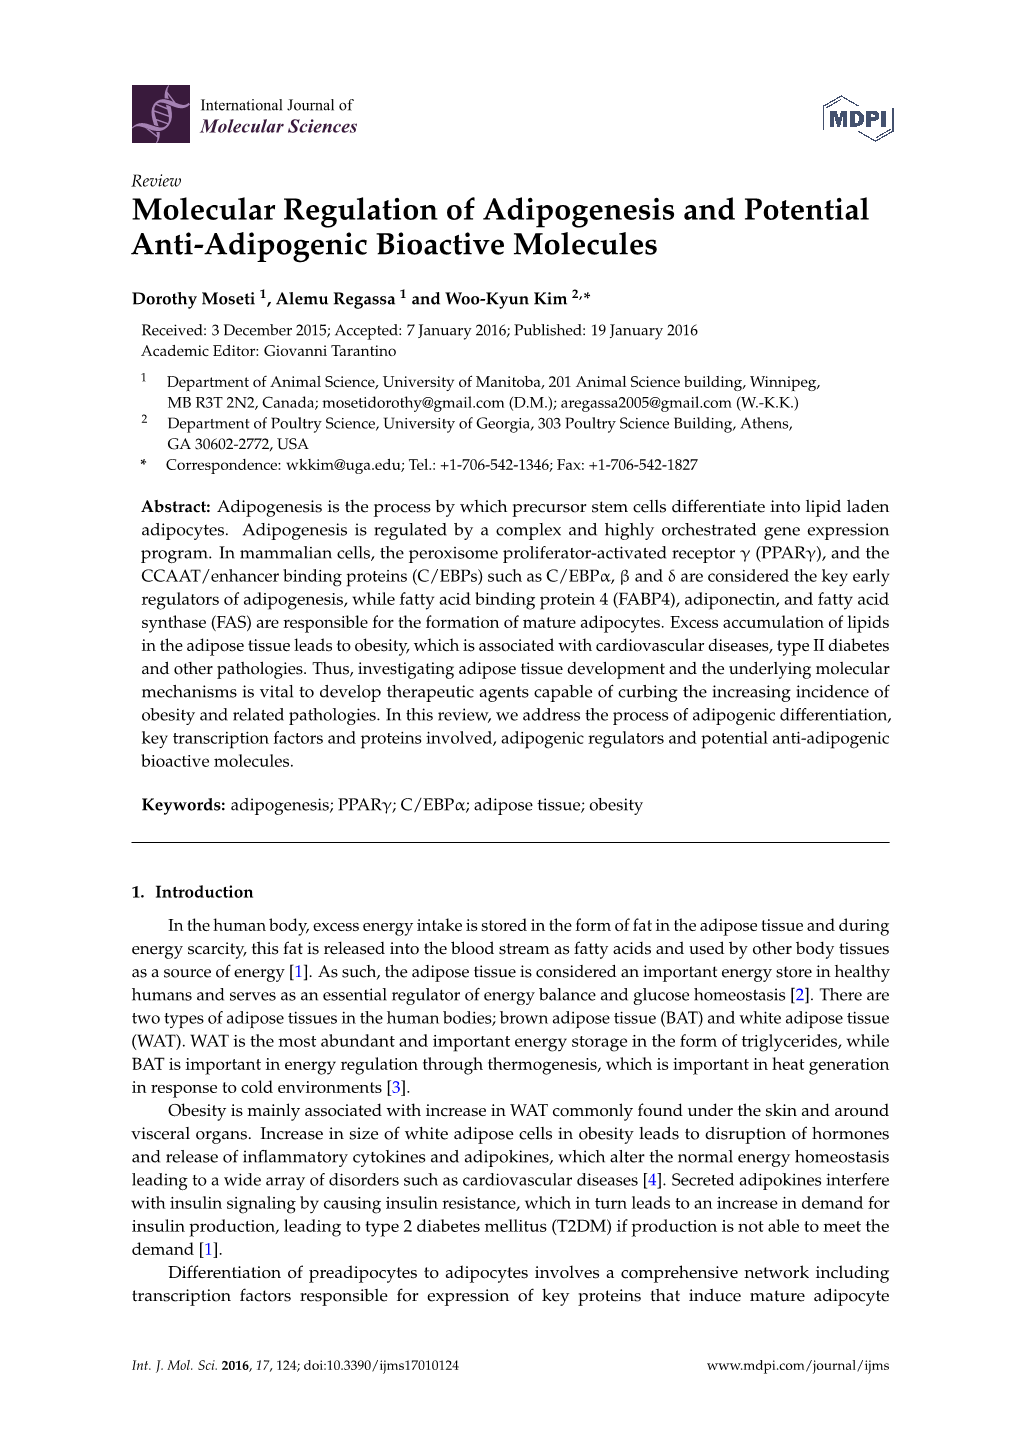 Molecular Regulation of Adipogenesis and Potential Anti-Adipogenic Bioactive Molecules